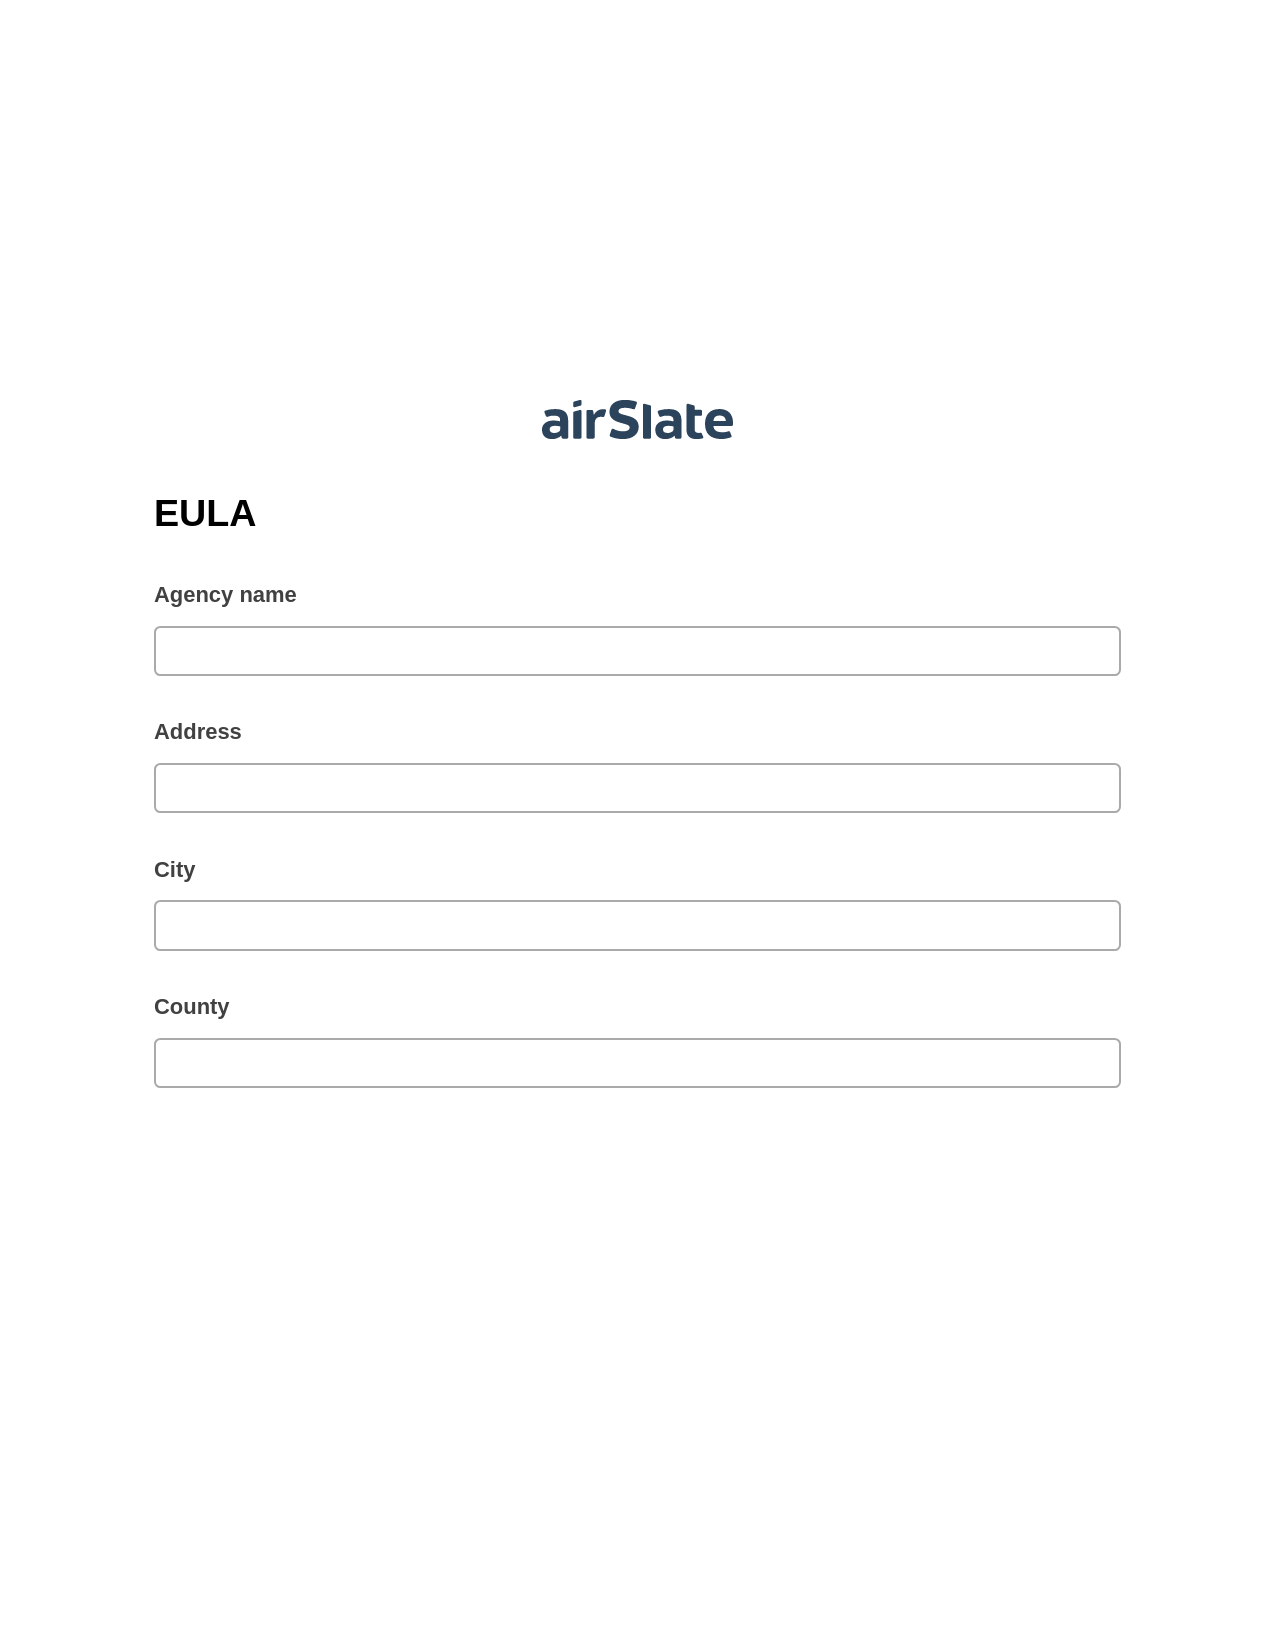 EULA Pre-fill Slate from MS Dynamics 365 Records Bot, Google Calendar Bot, OneDrive Bot